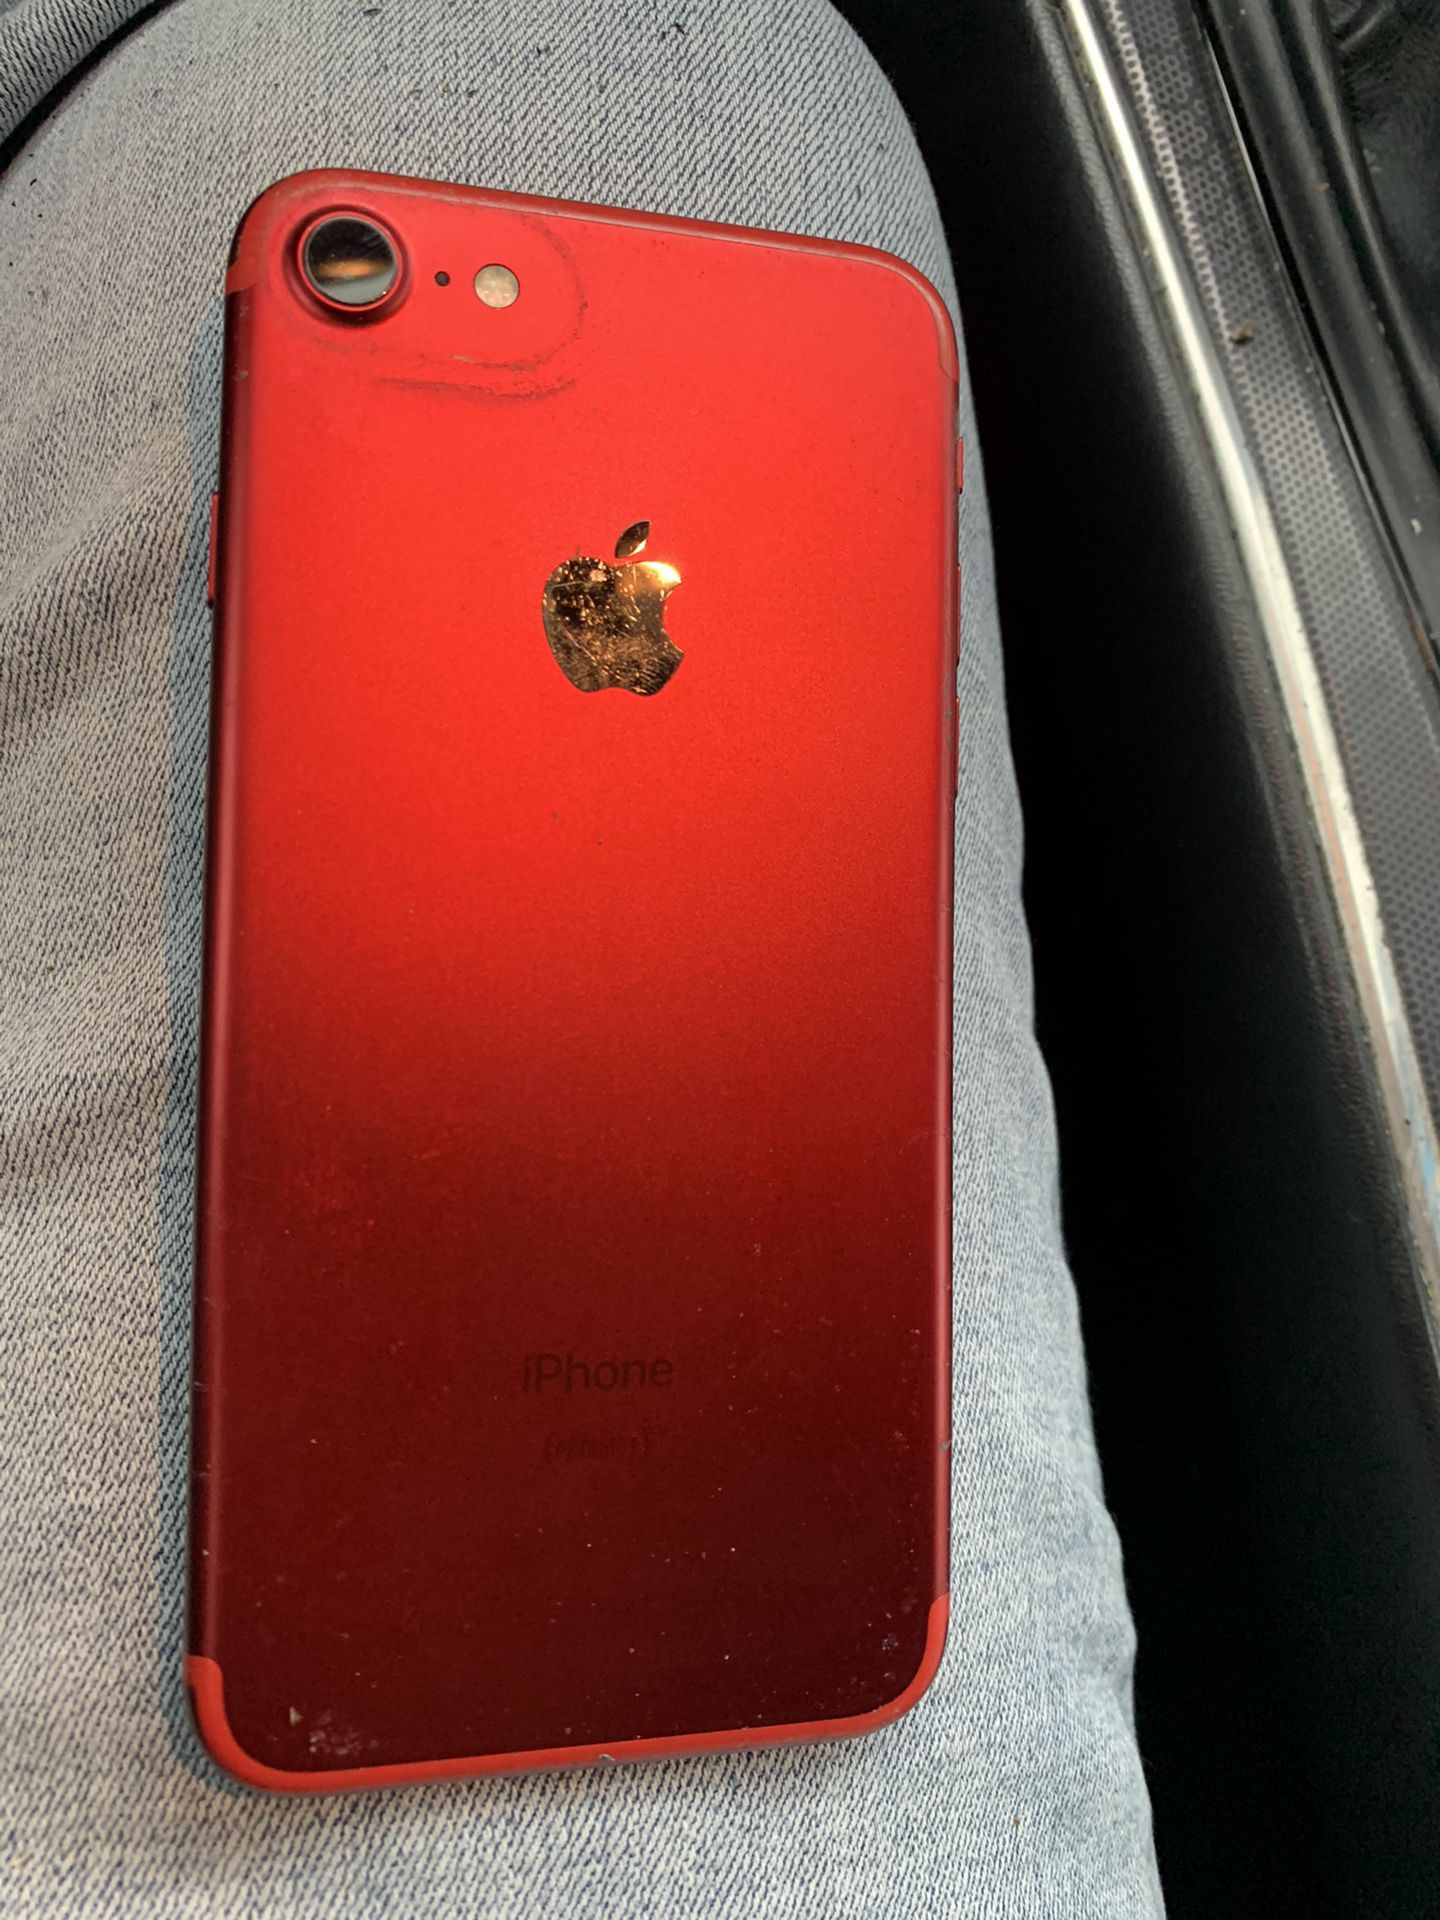 Red iPhone 7 128gb No Cracks